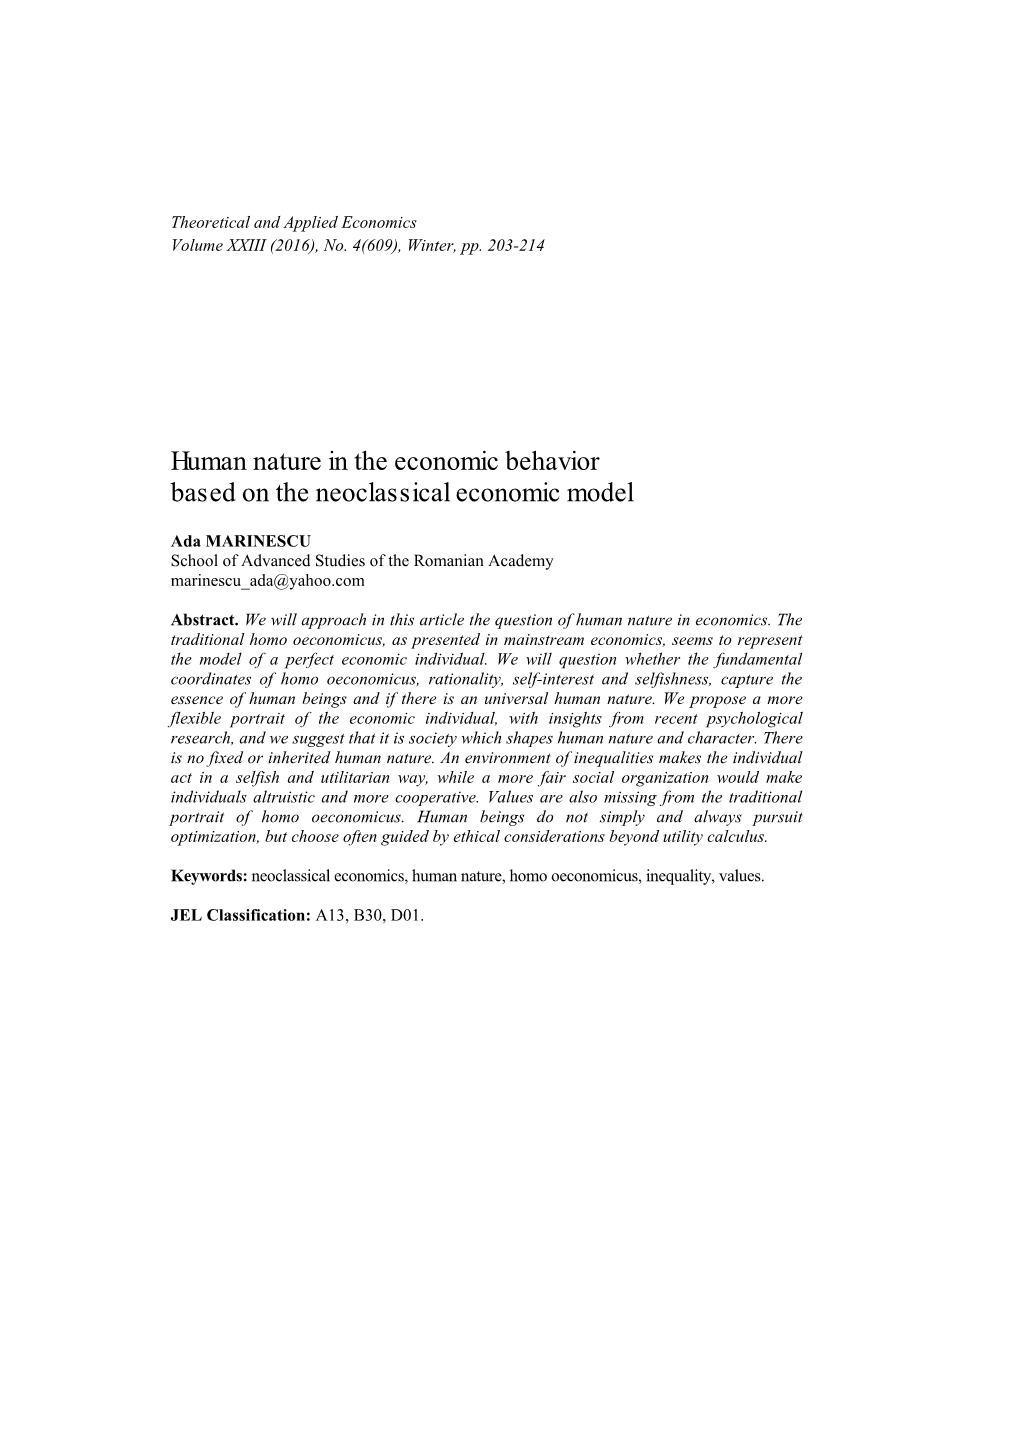 Human Nature in the Economic Behavior Based on the Neoclassical Economic Model